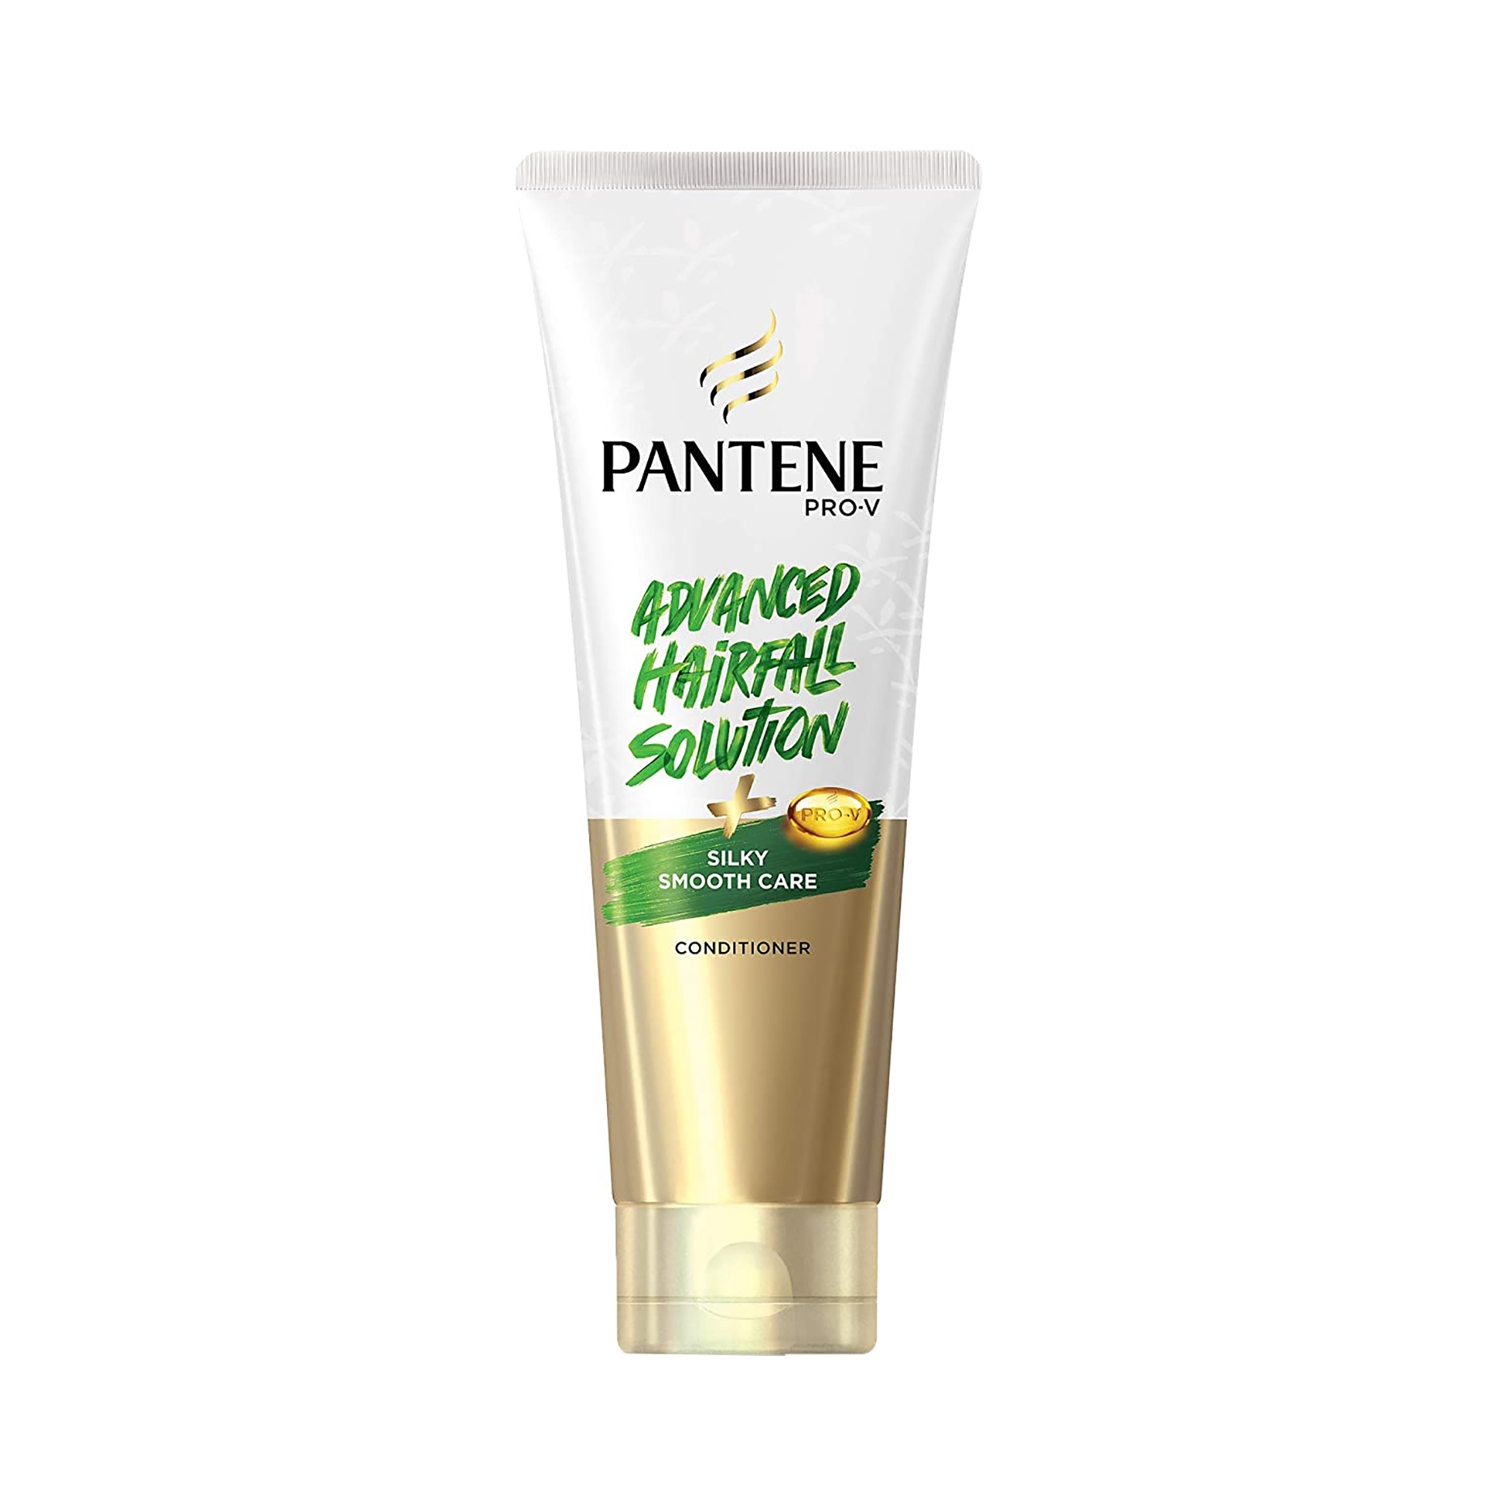 Pantene | Pantene Advanced Hairfall Solution Anti-Hairfall Silky Smooth Conditioner (180ml)